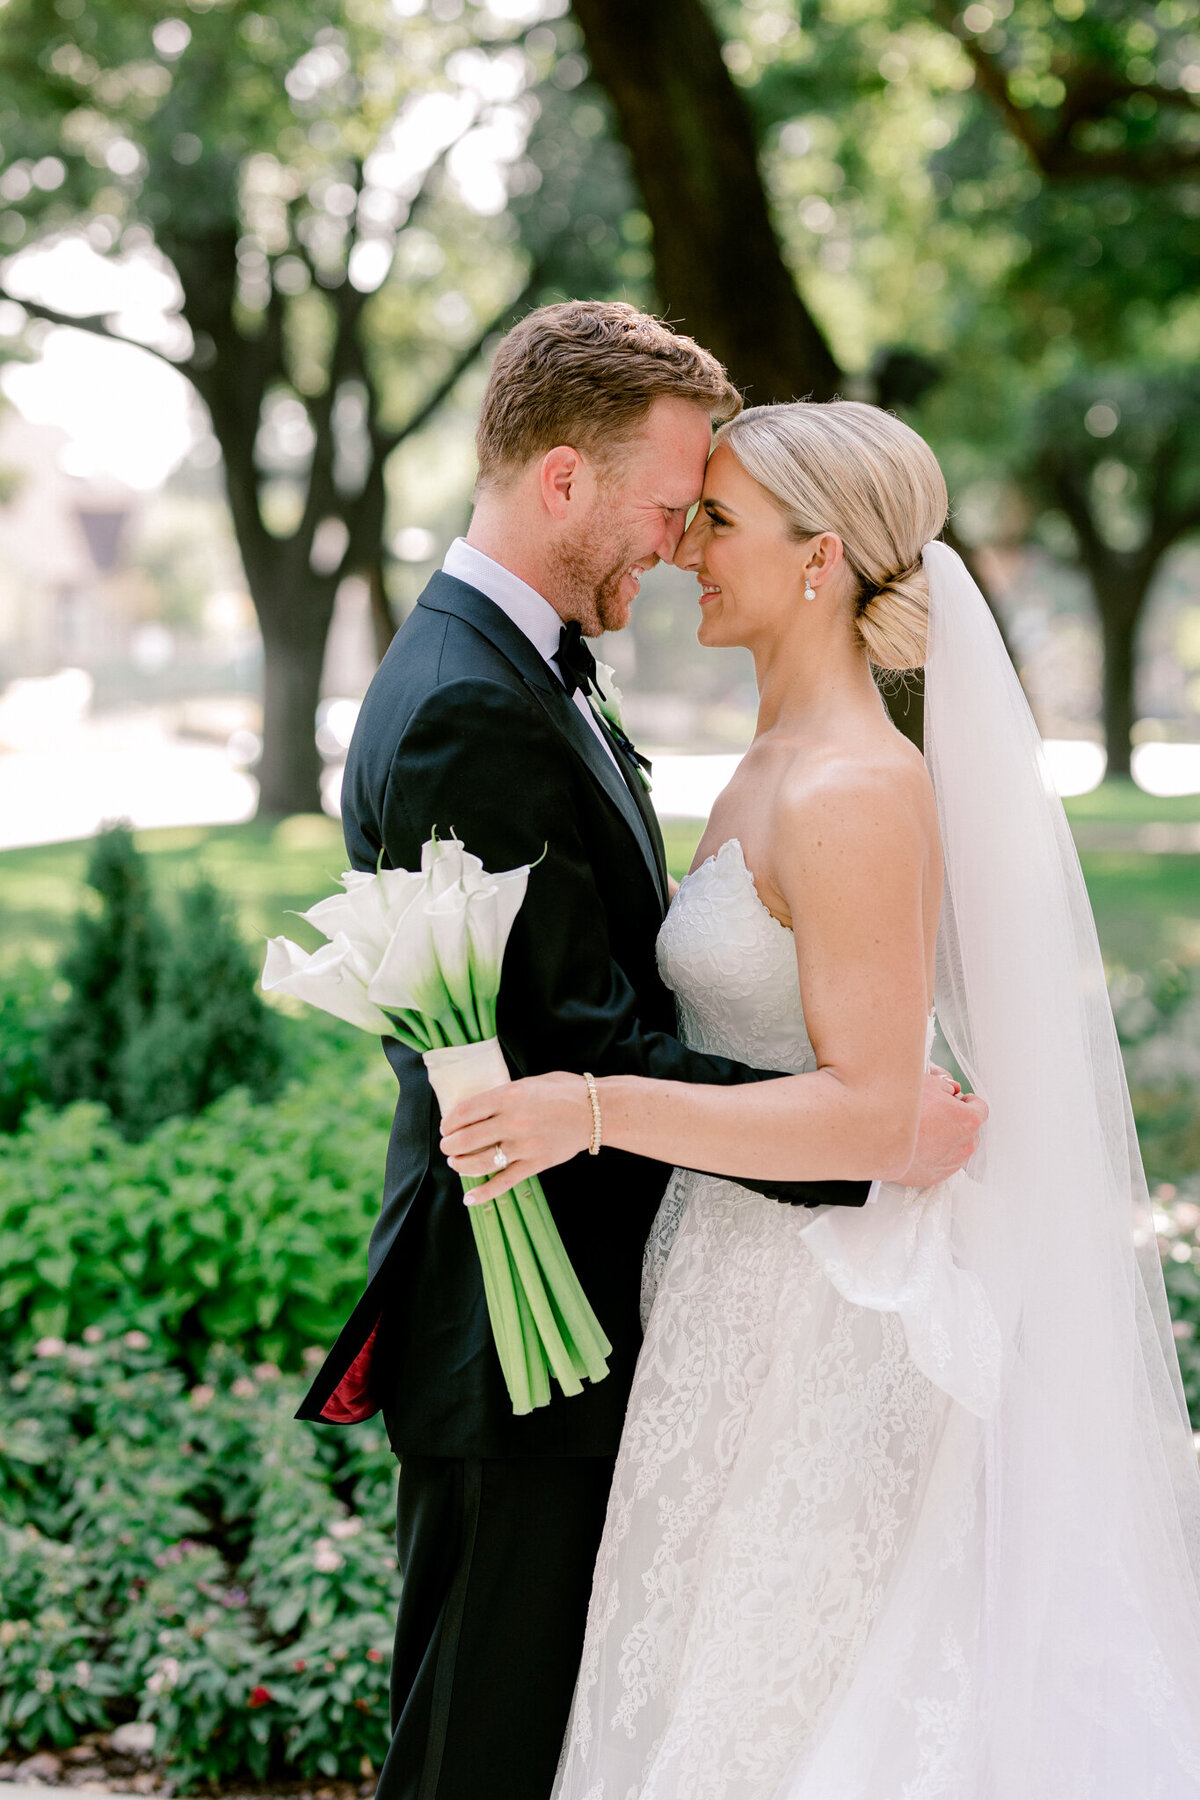 Katelyn & Kyle's Wedding at the Adolphus Hotel | Dallas Wedding Photographer | Sami Kathryn Photography-206